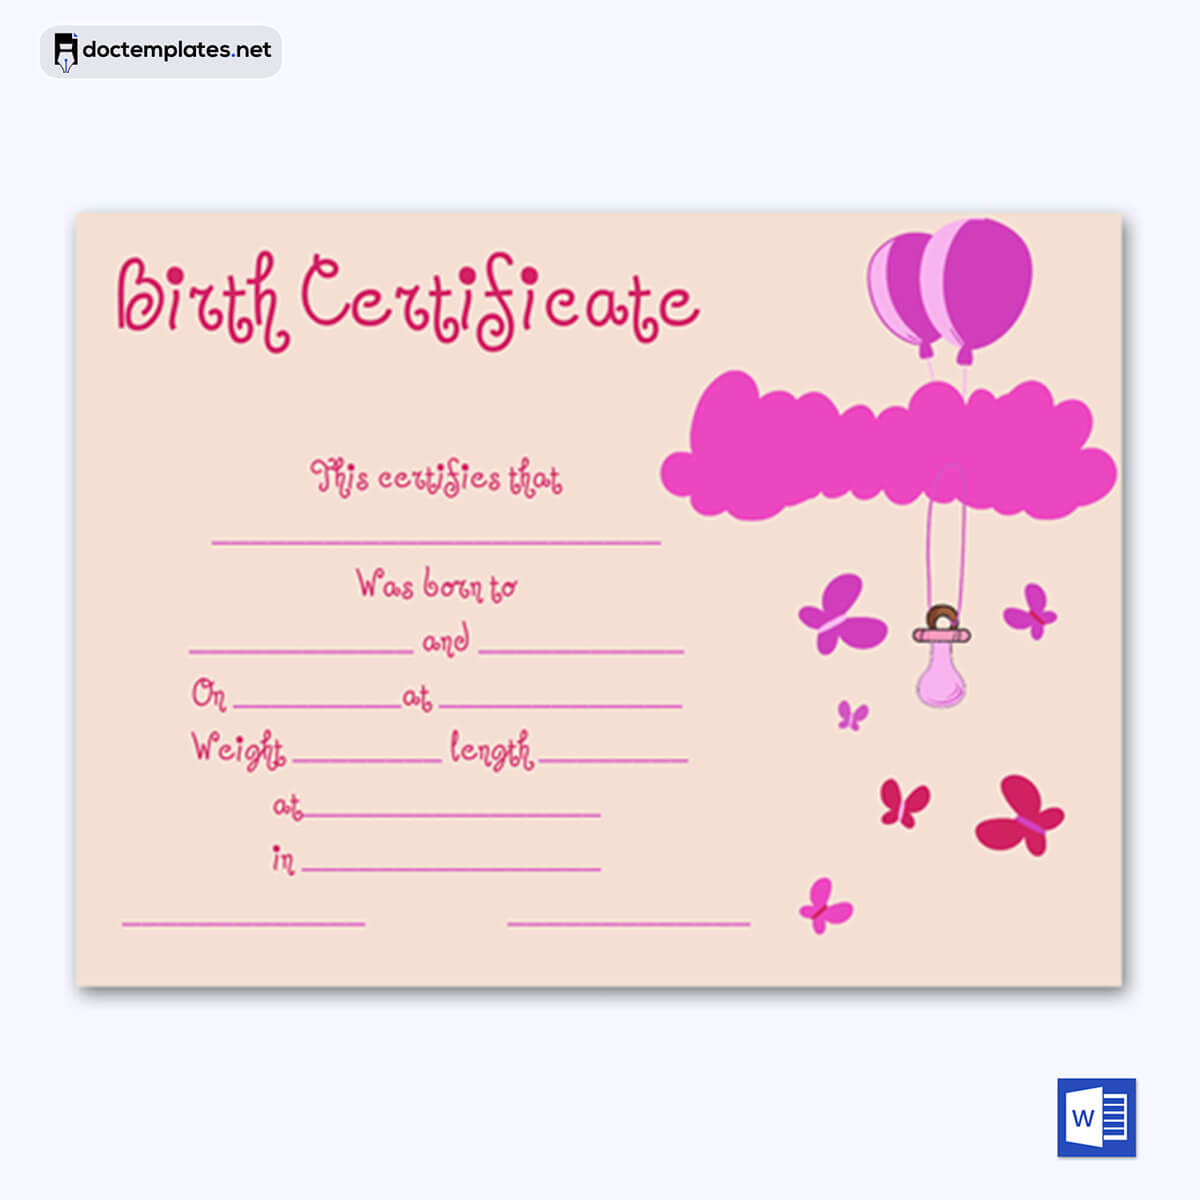 Image of Hospital birth certificate format PDF
Hospital birth certificate format PDF
 09